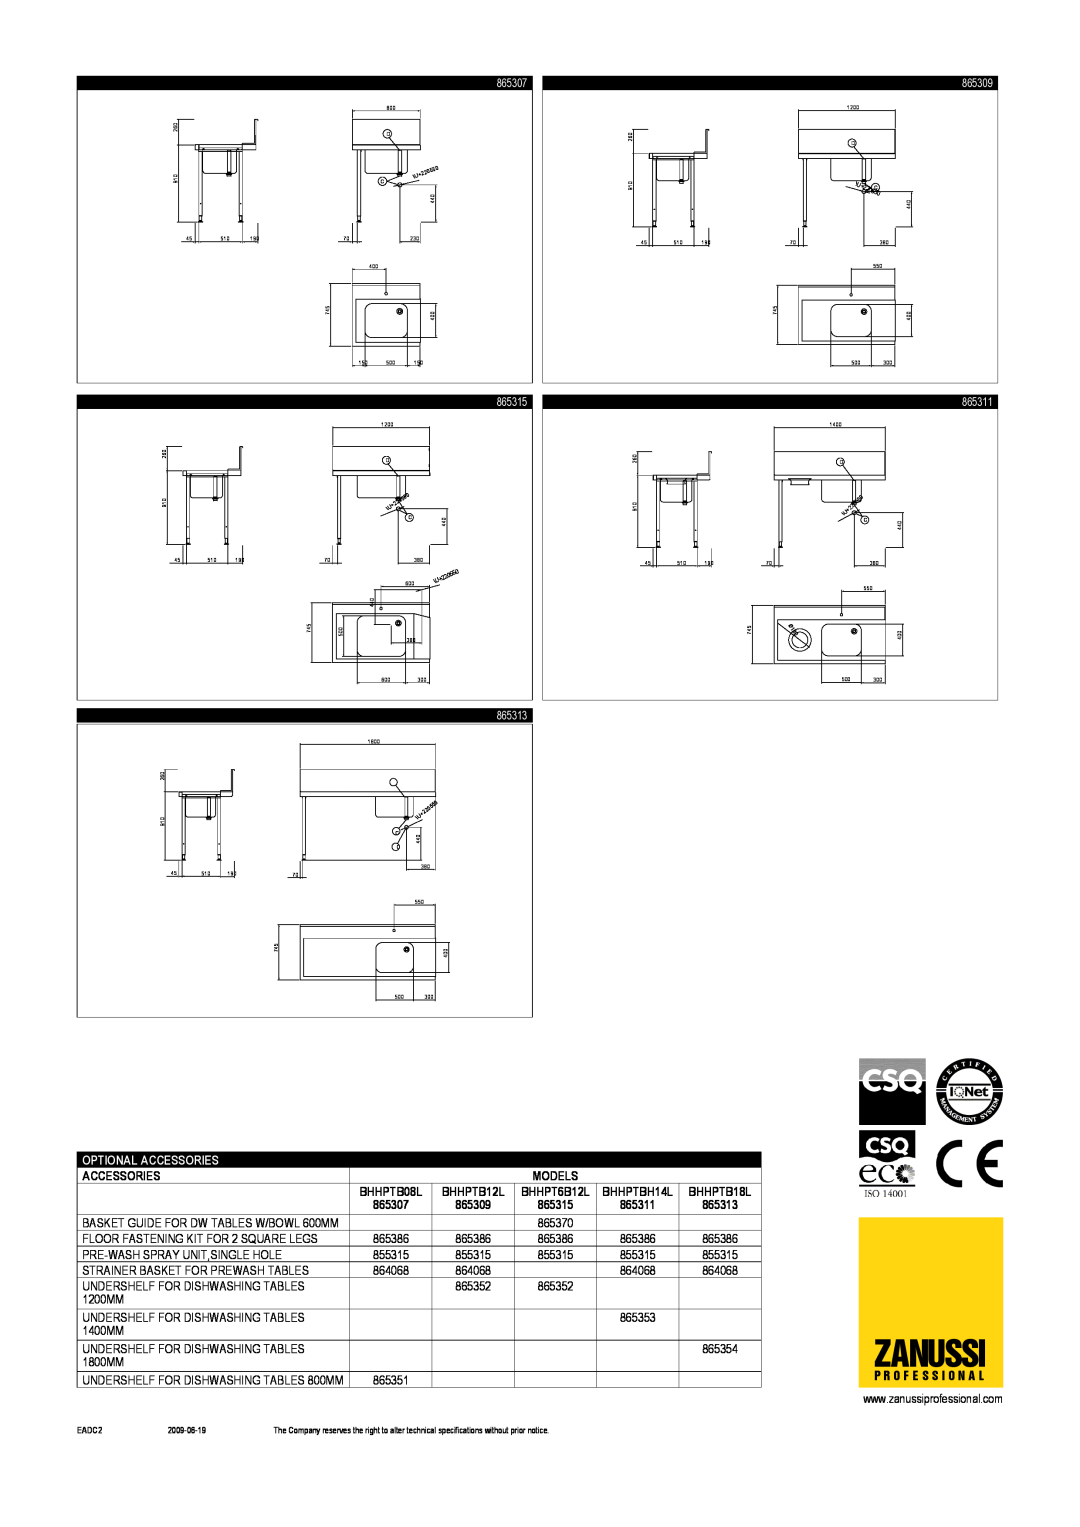 Zanussi SPK-1 dimensions Zanussi, Optional Accessories, Models 